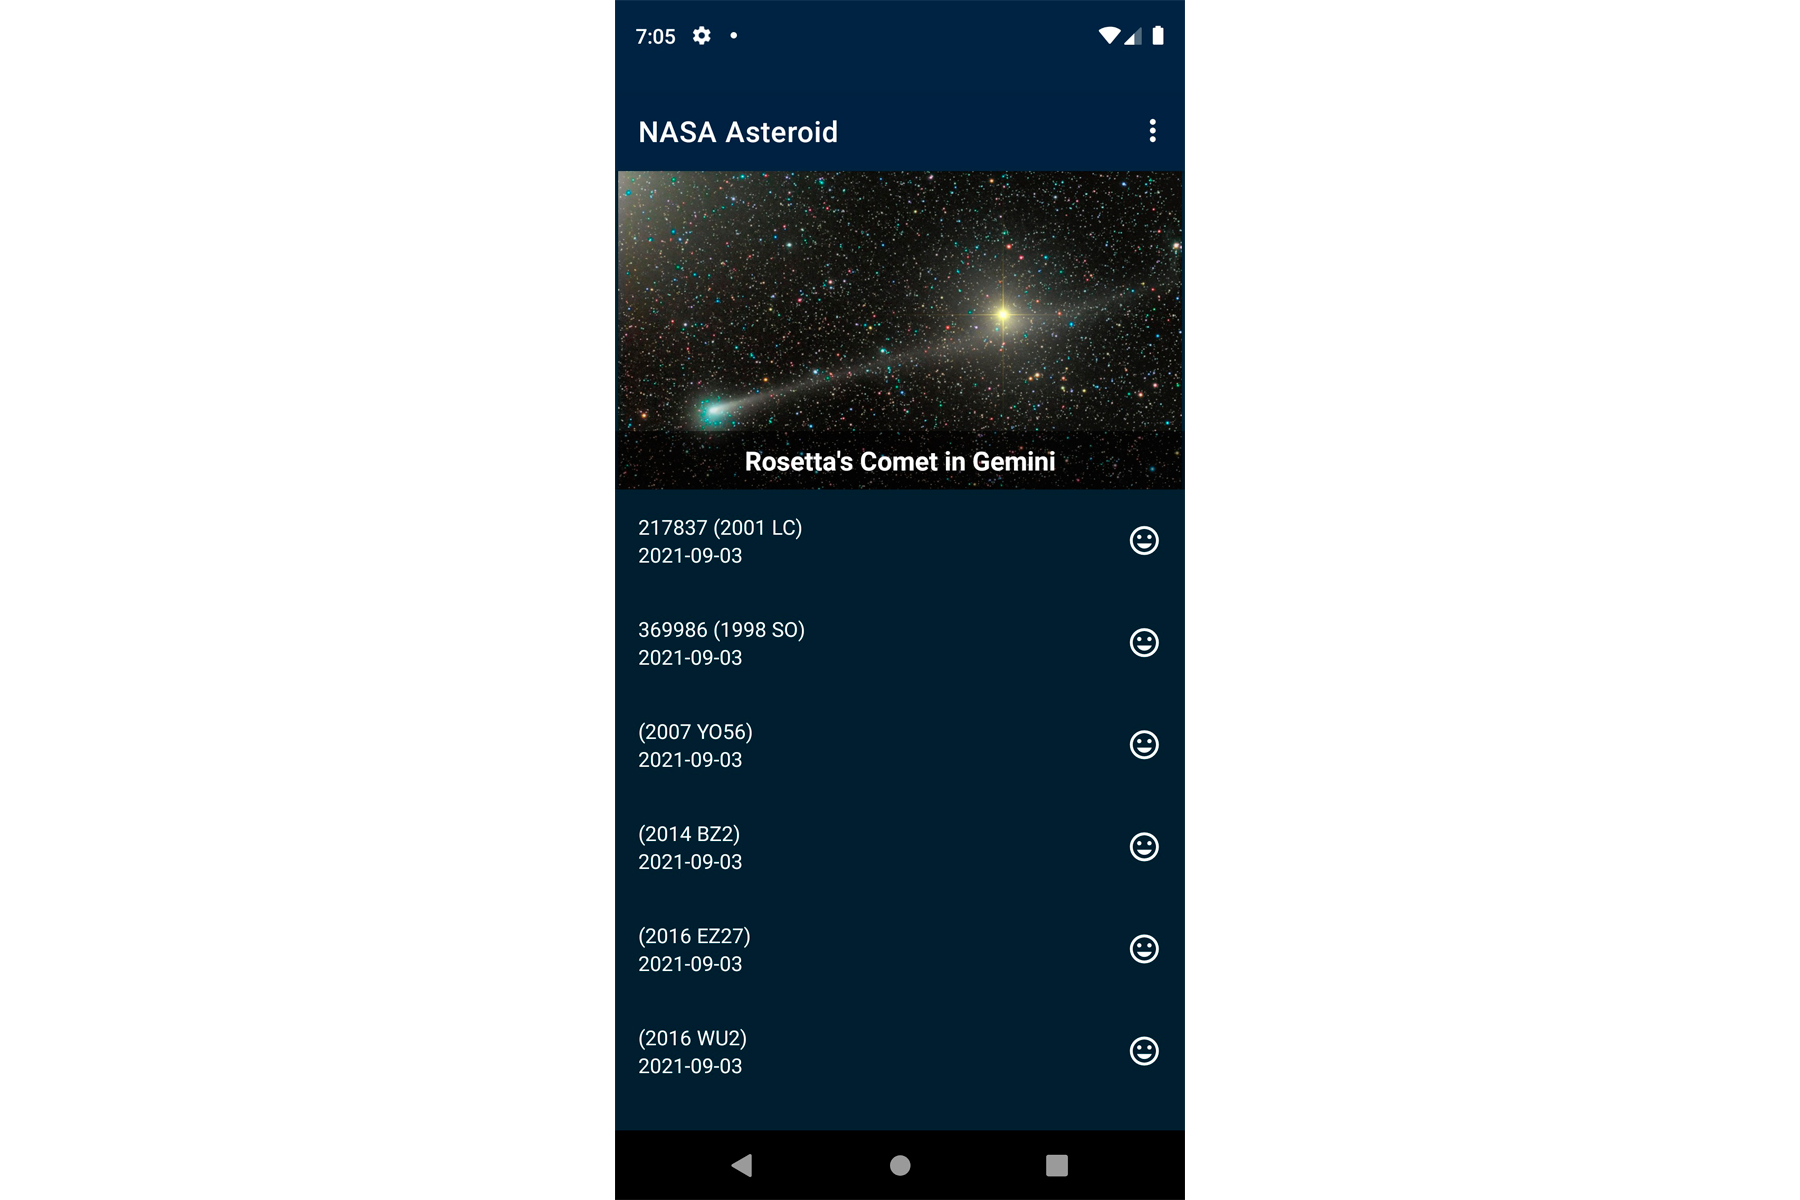 Nasa asteroid app screenshot